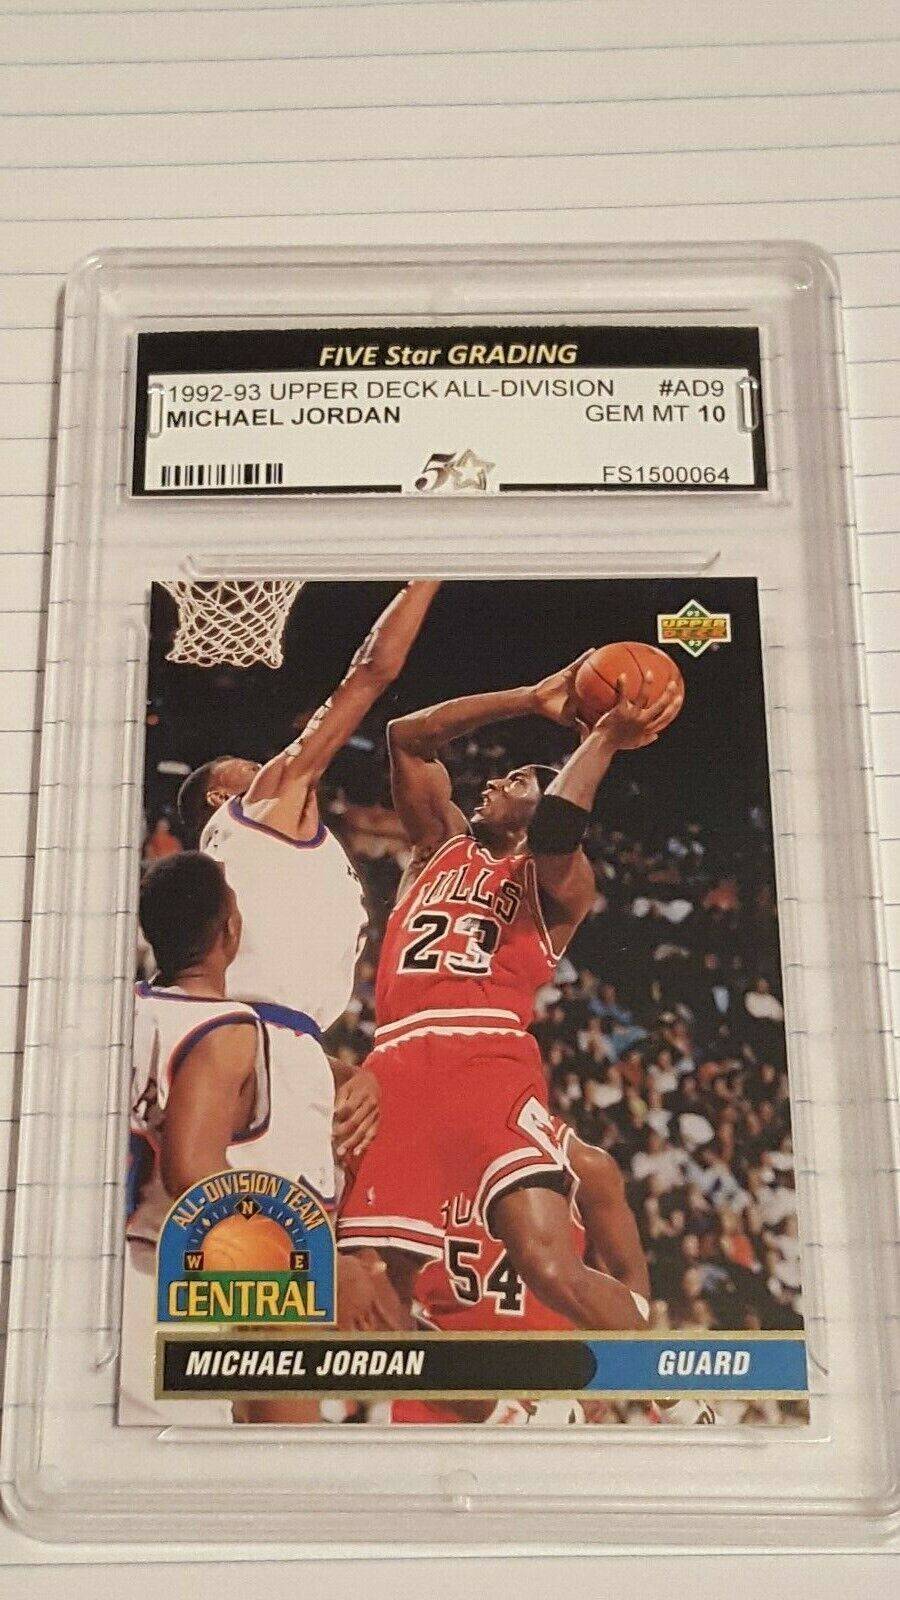 1992-93 Upper Deck All Division Michael Jordan Basketball Card (Gem Mint 10)